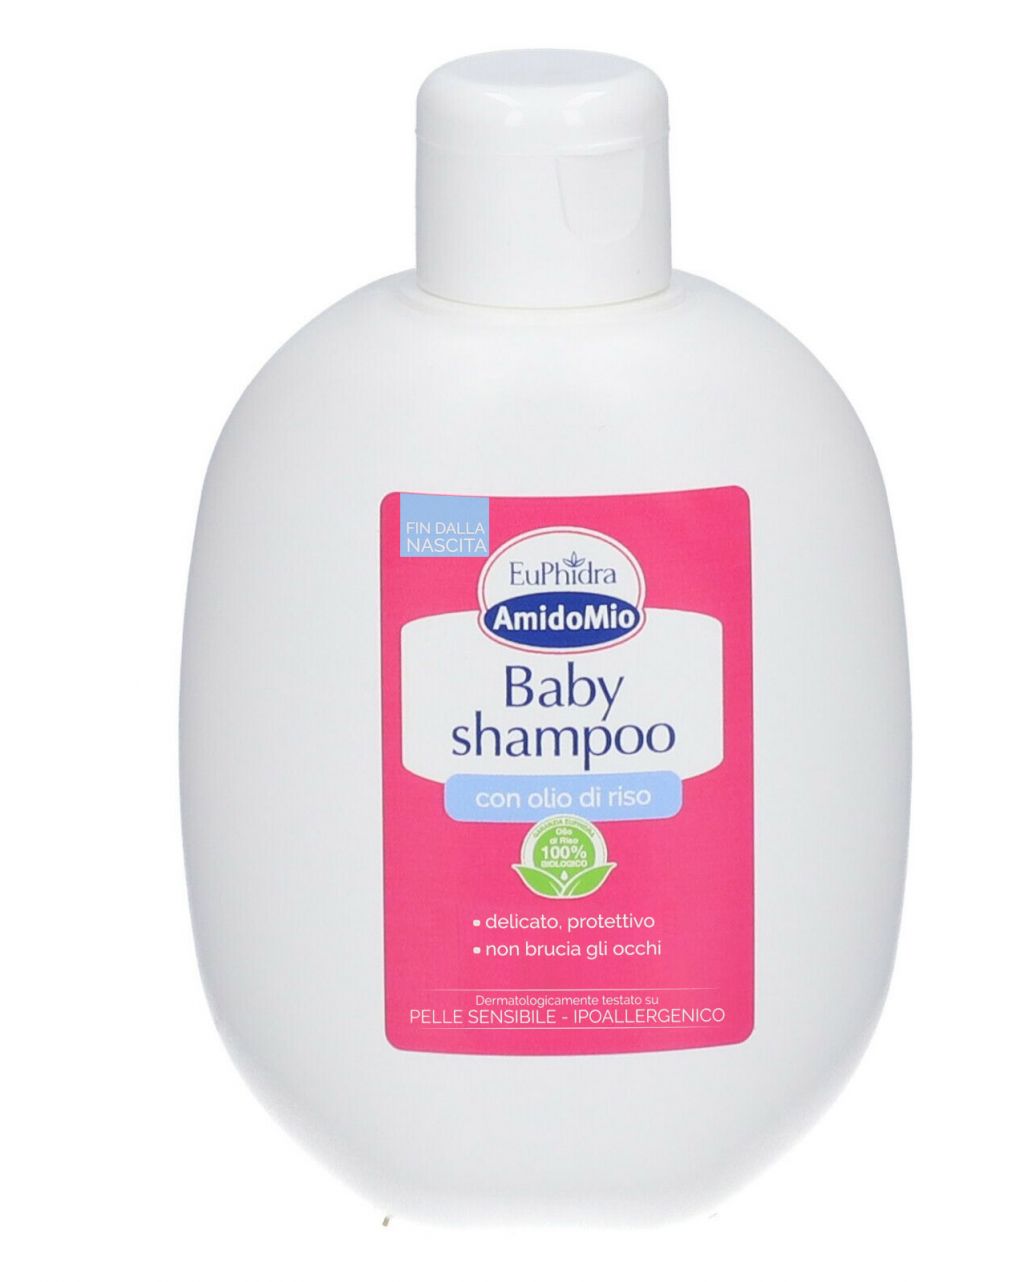 Baby shampoo 200ml - euphidra amidomio